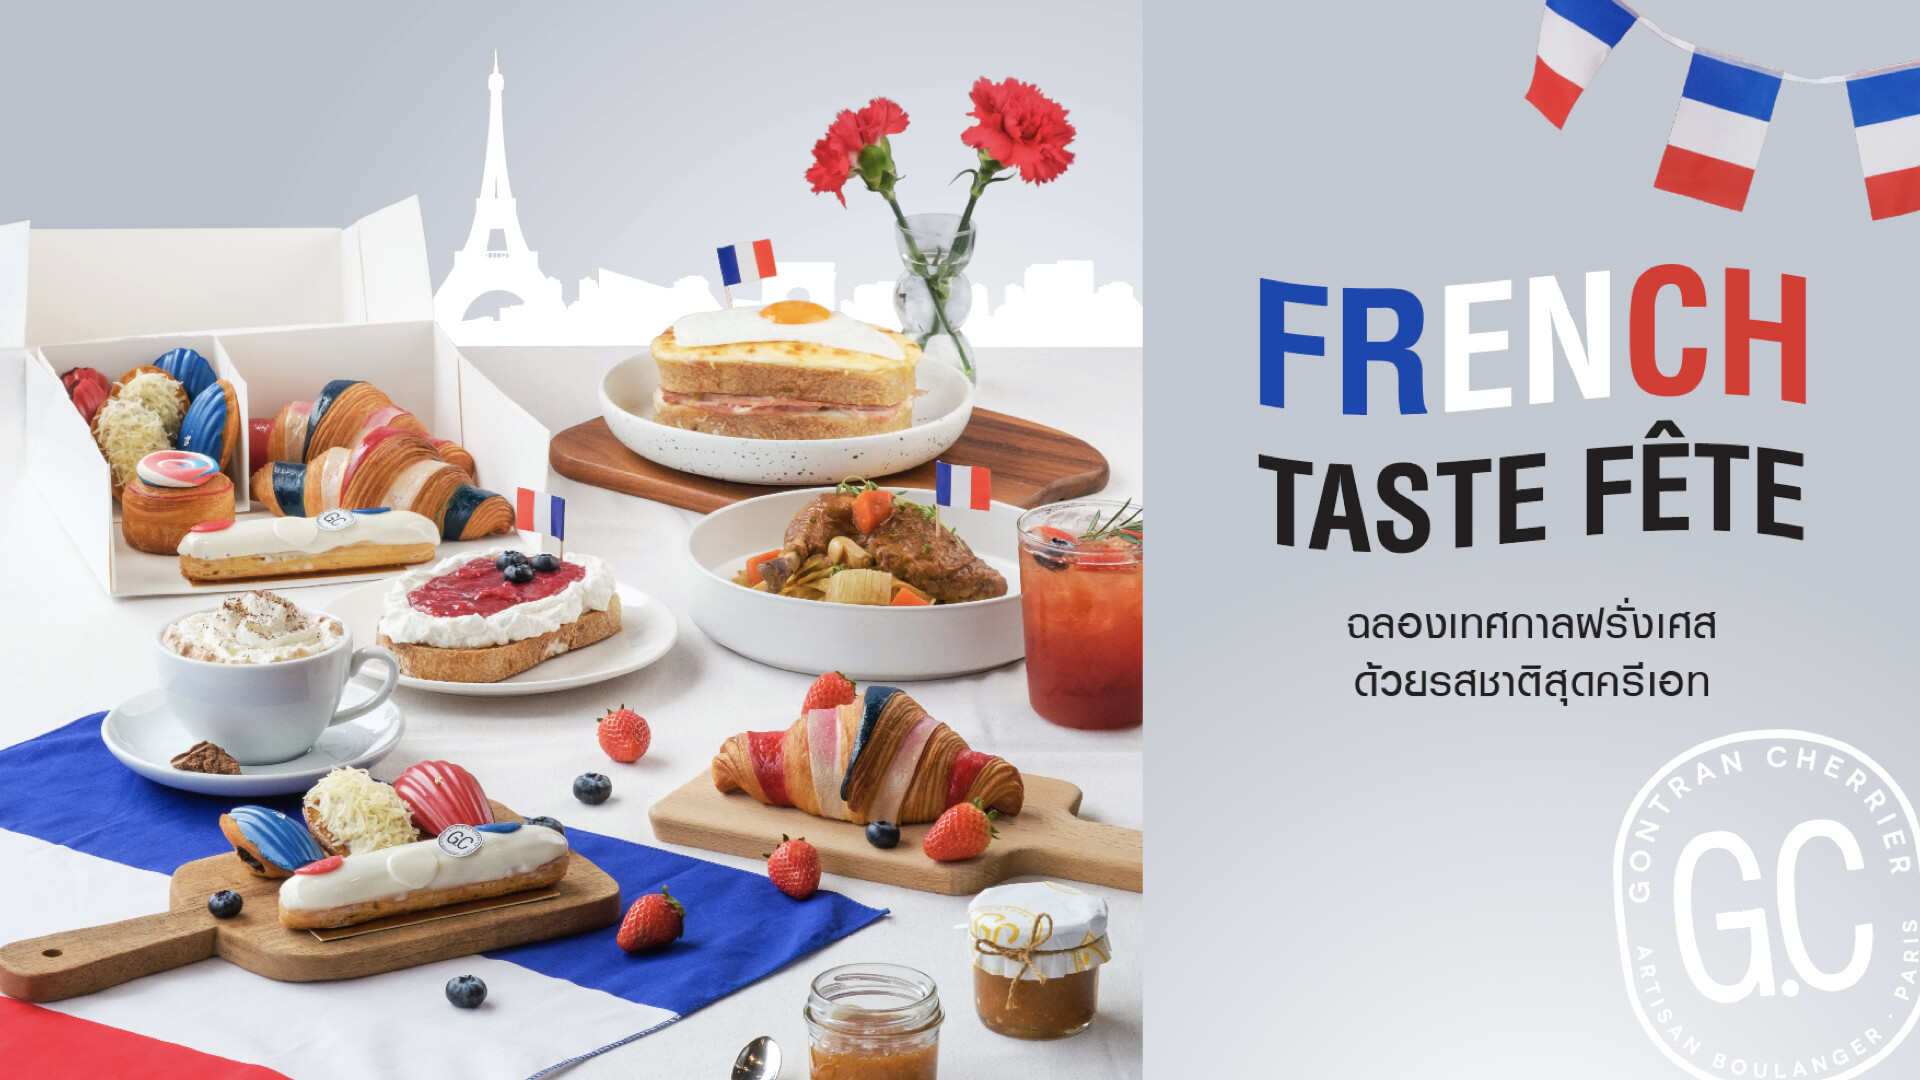 Gontran Cherrier รังสรรค์เมนู "French Taste Fete" ฉลองเทศกาล "Bastille Day" ด้วยรสชาติสุดครีเอท ดื่มด่ำและสัมผัสความอร่อยสไตล์ฝรั่งเศสแท้ๆ ได้แล้ววันนี้